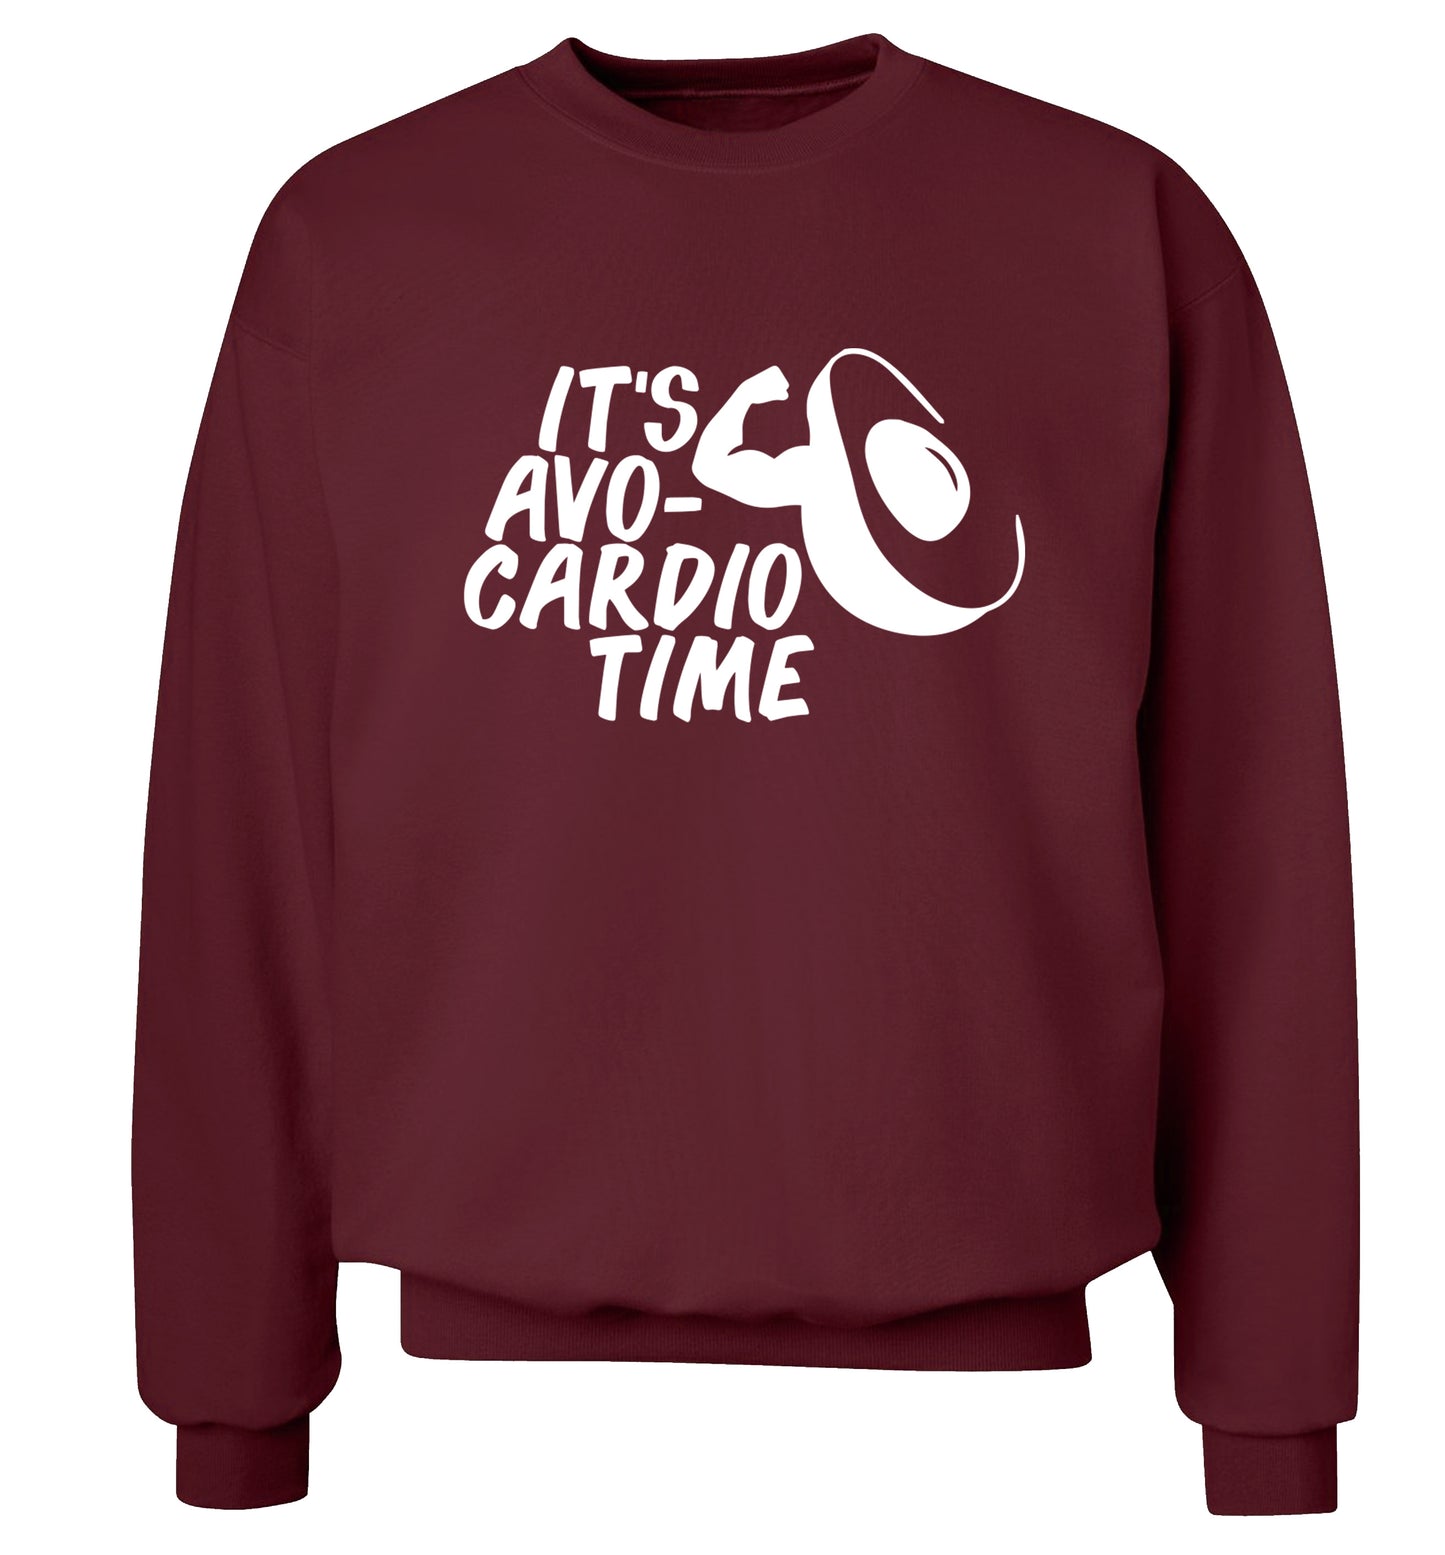 It's avo-cardio time Adult's unisex maroon Sweater 2XL